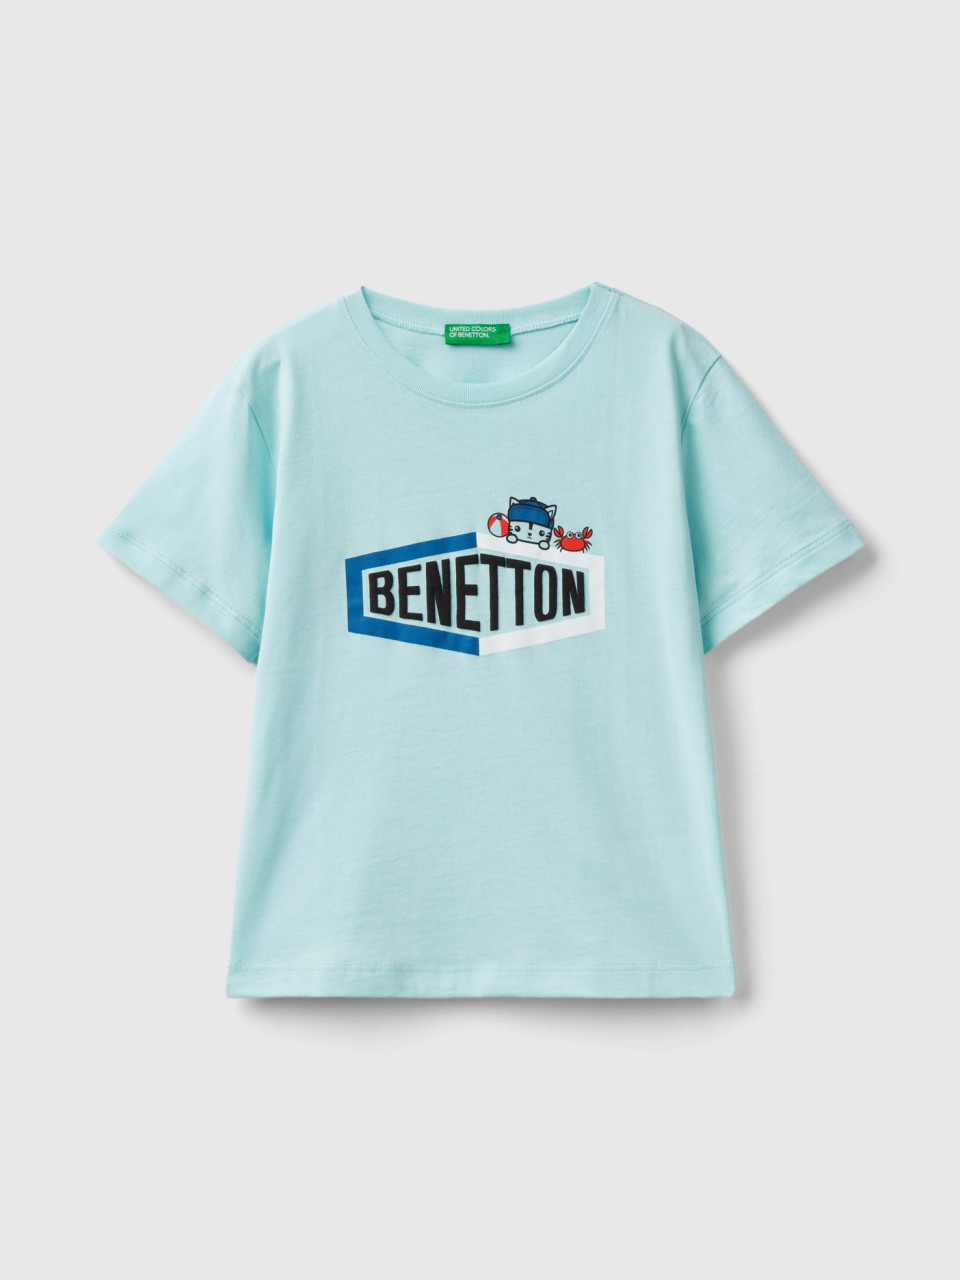 Benetton, T-shirt With Print In 100% Organic Cotton, Aqua, Kids